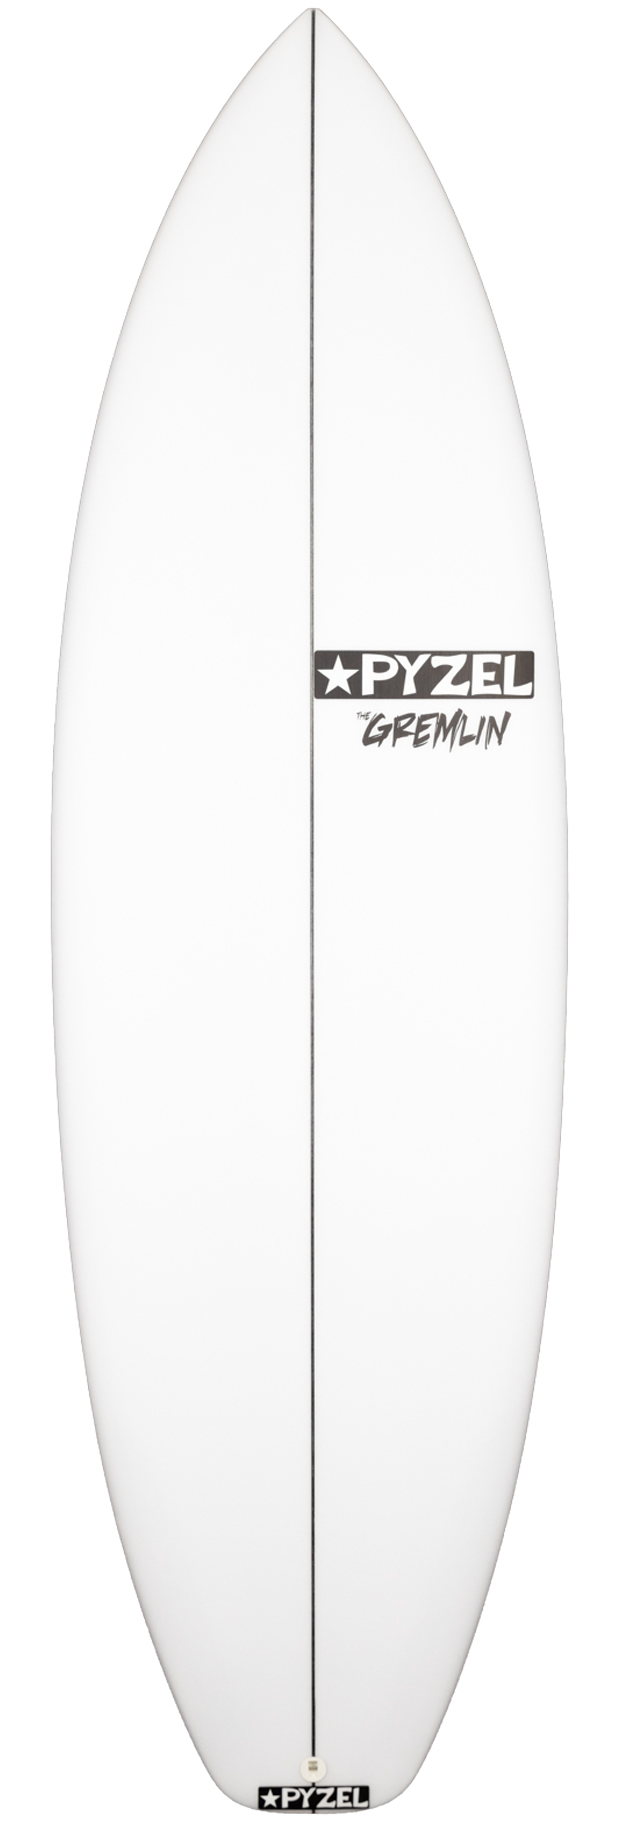 pyzel gremlin surfboard in white